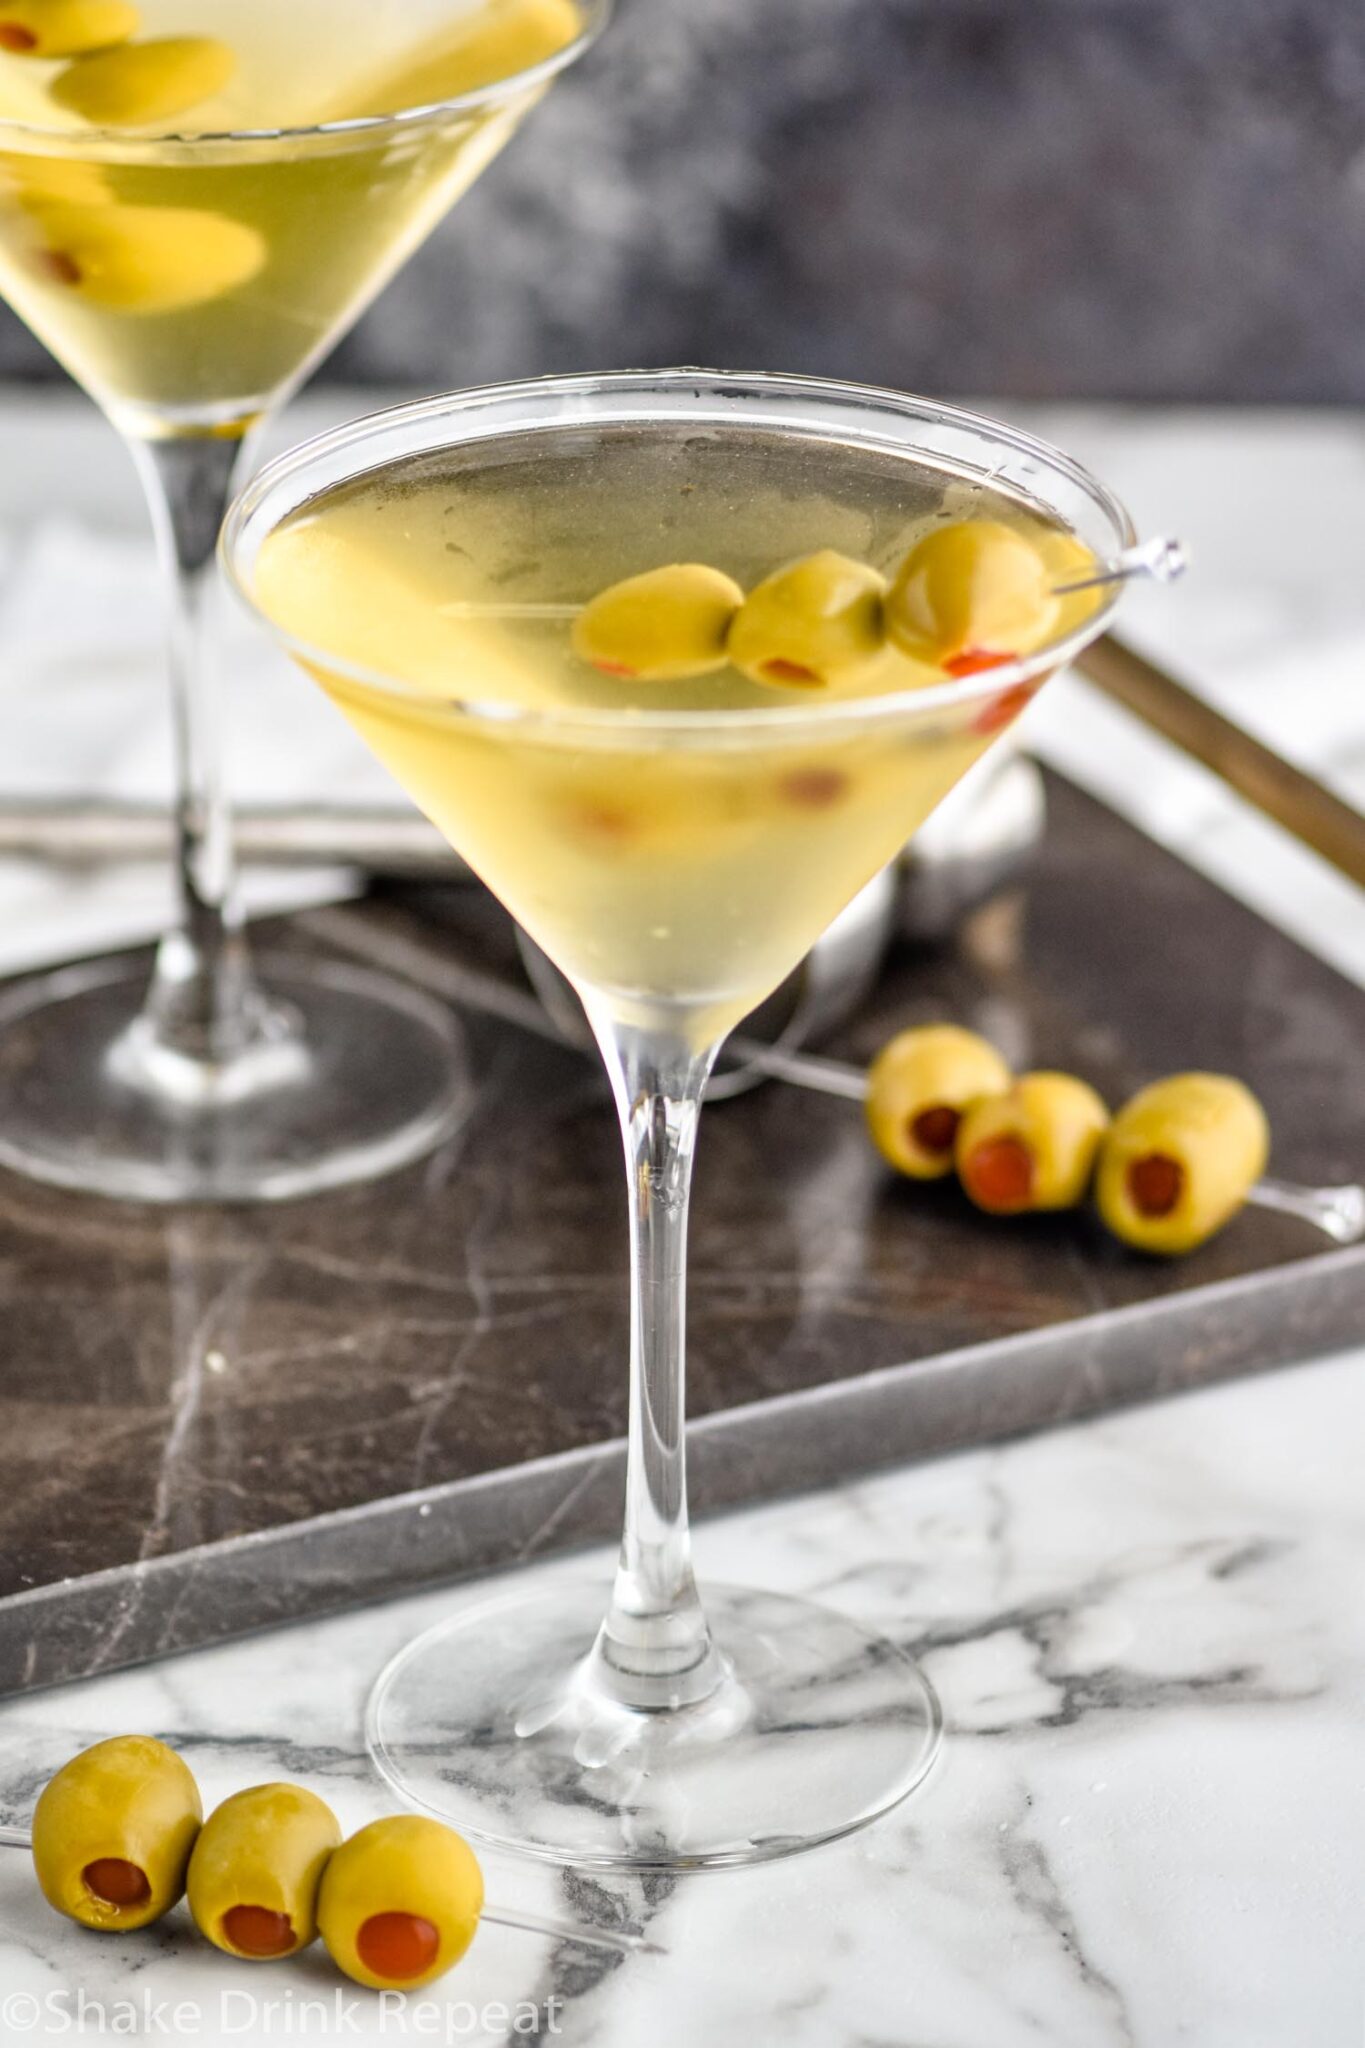 Dirty Martini Recipe - Shake Drink Repeat